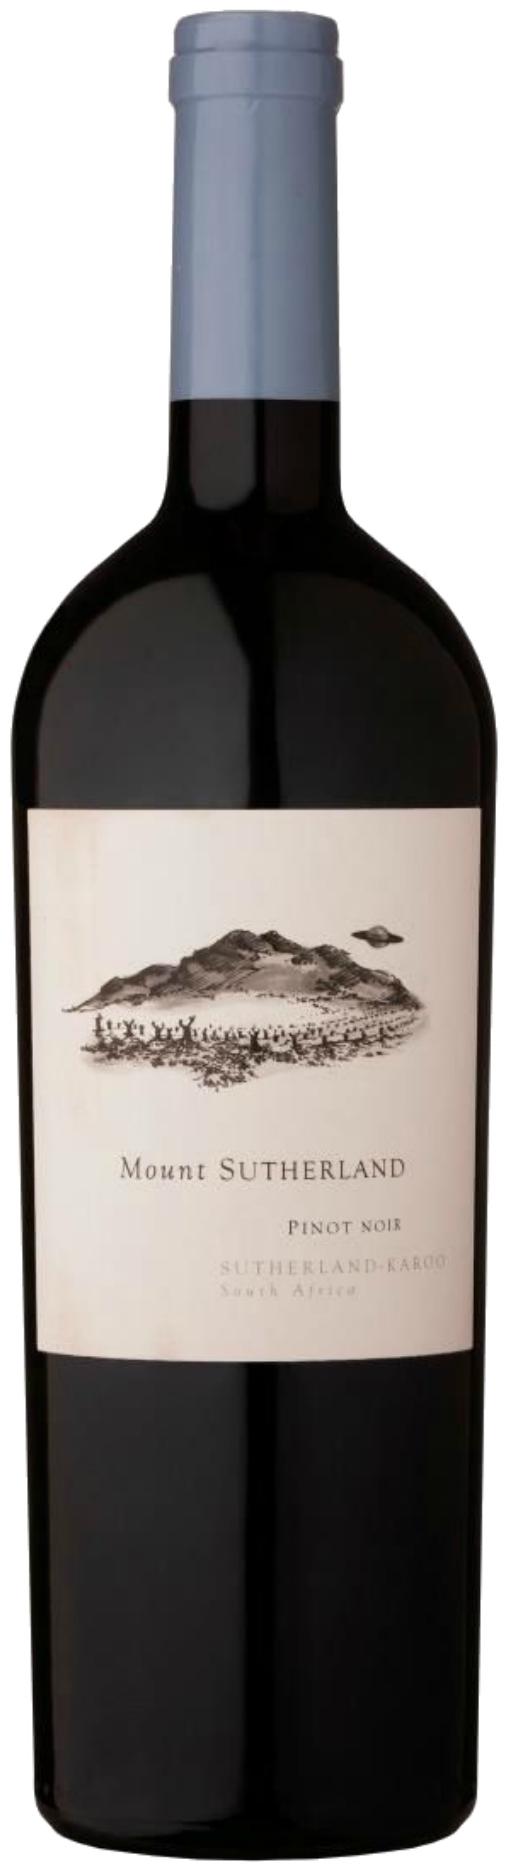 Mount Sutherland Pinot Noir 2015